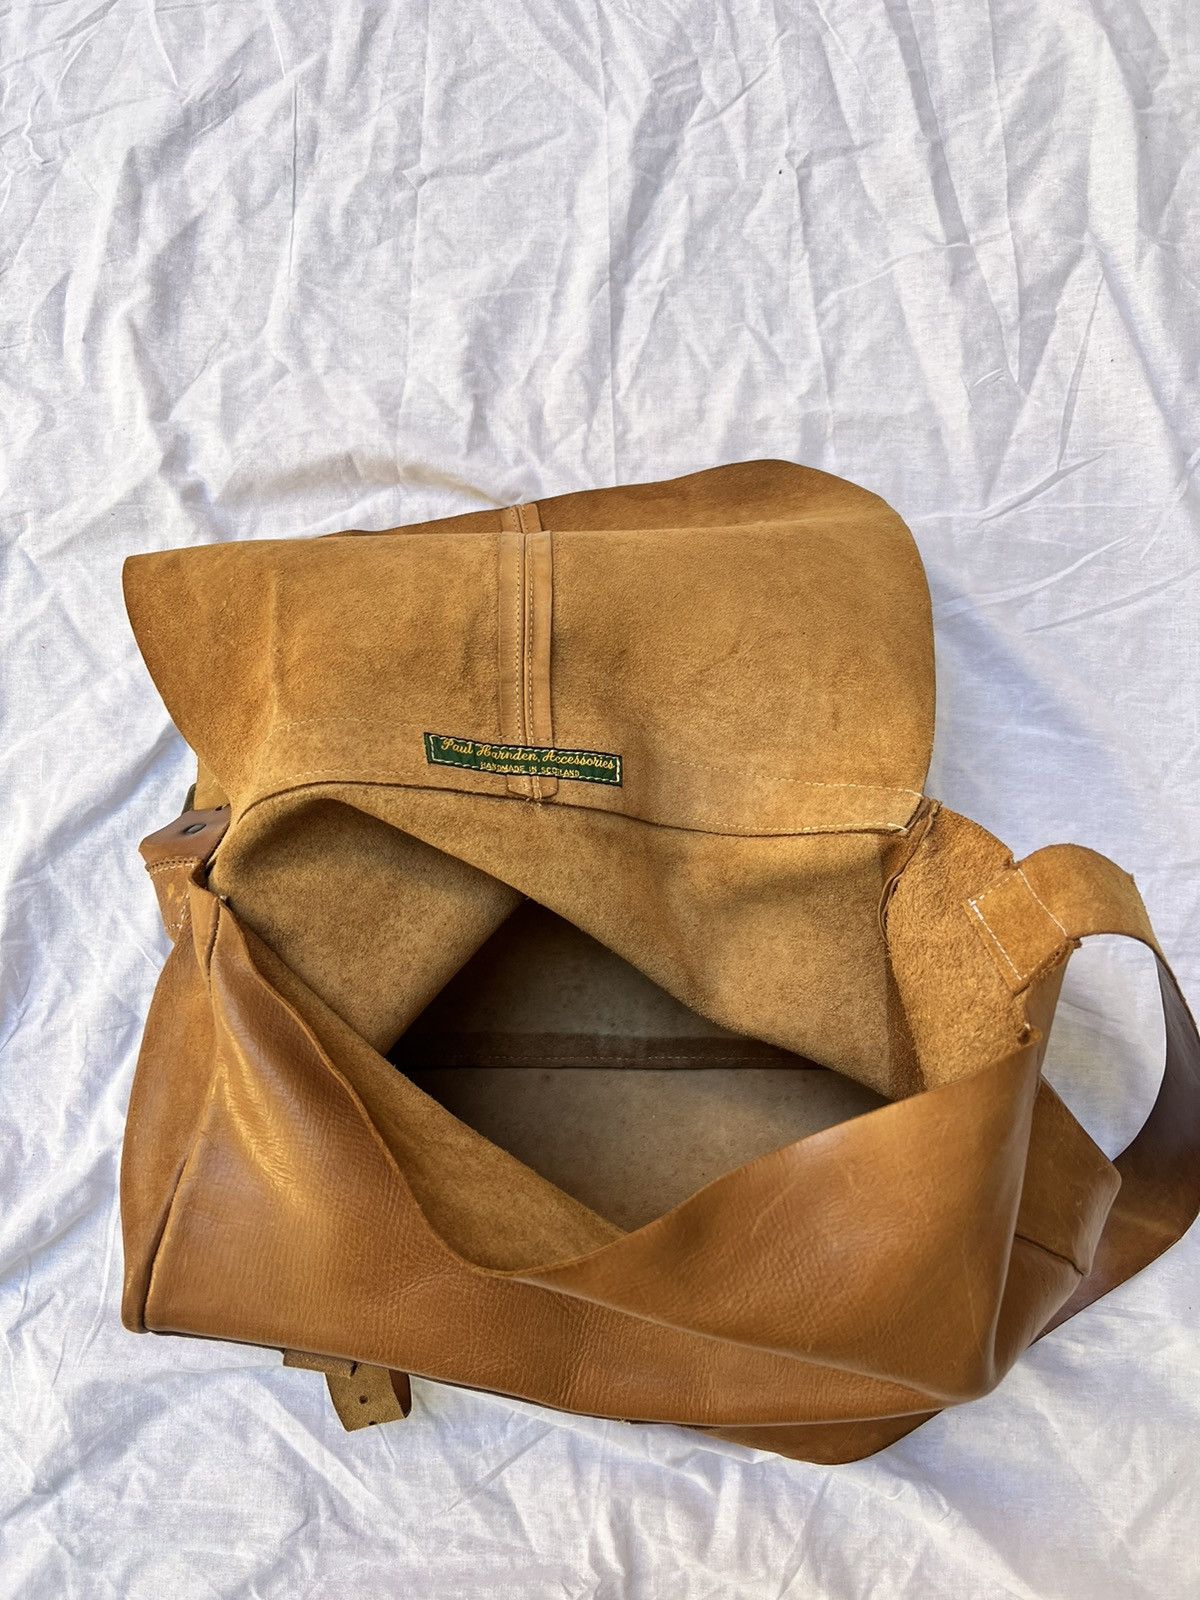 Paul Harnden Shoemakers Messenger bag | Grailed